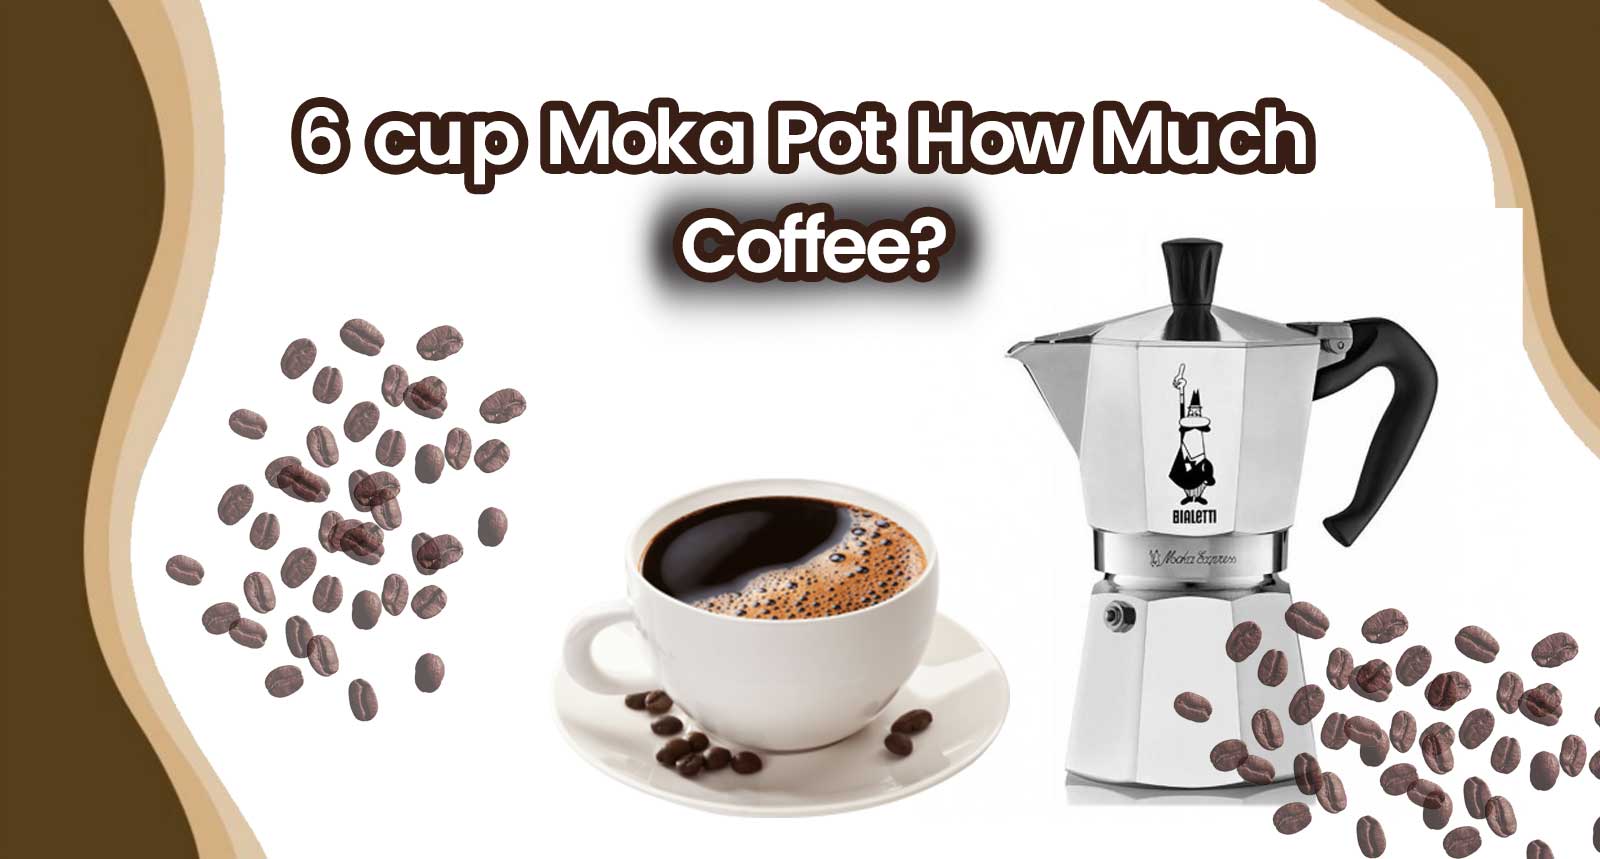 6-cup moka pot how much coffee